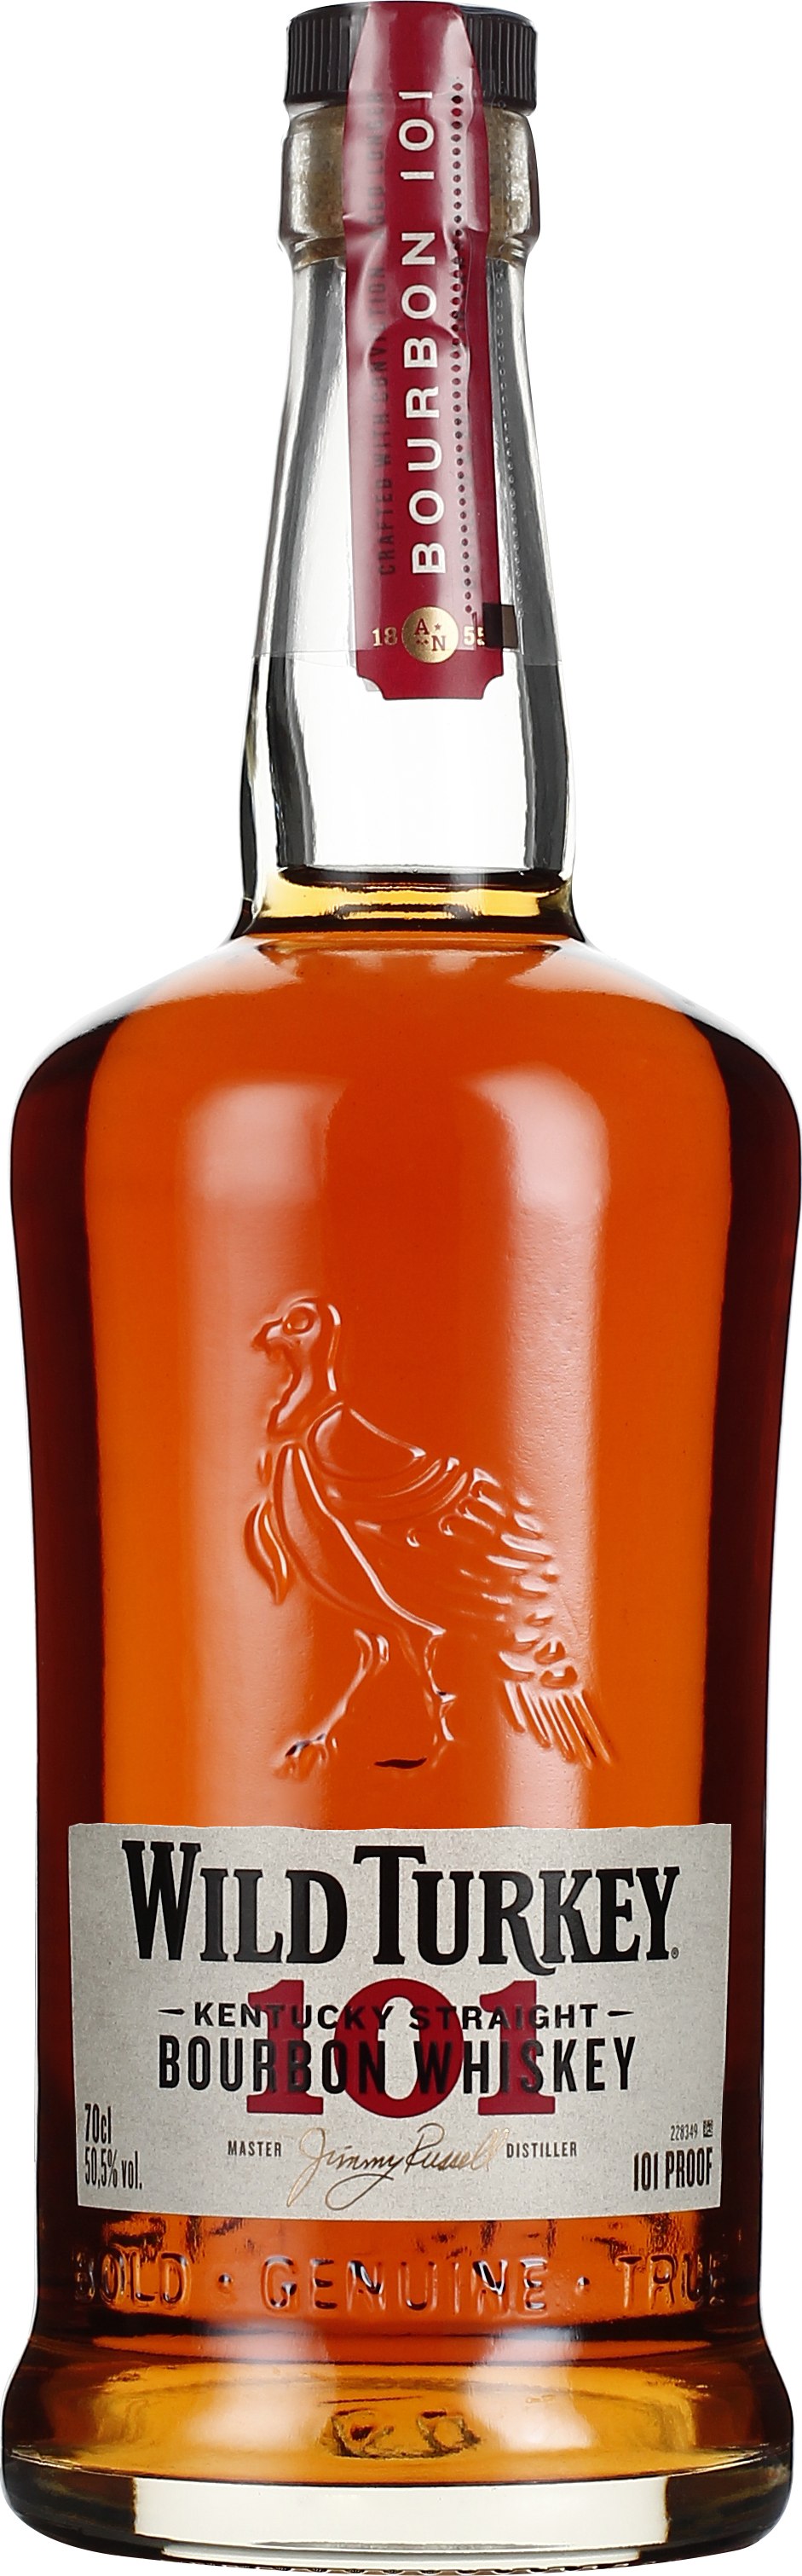 Drankdozijn Wild Turkey Bourbon 101 Proof 70CL aanbieding